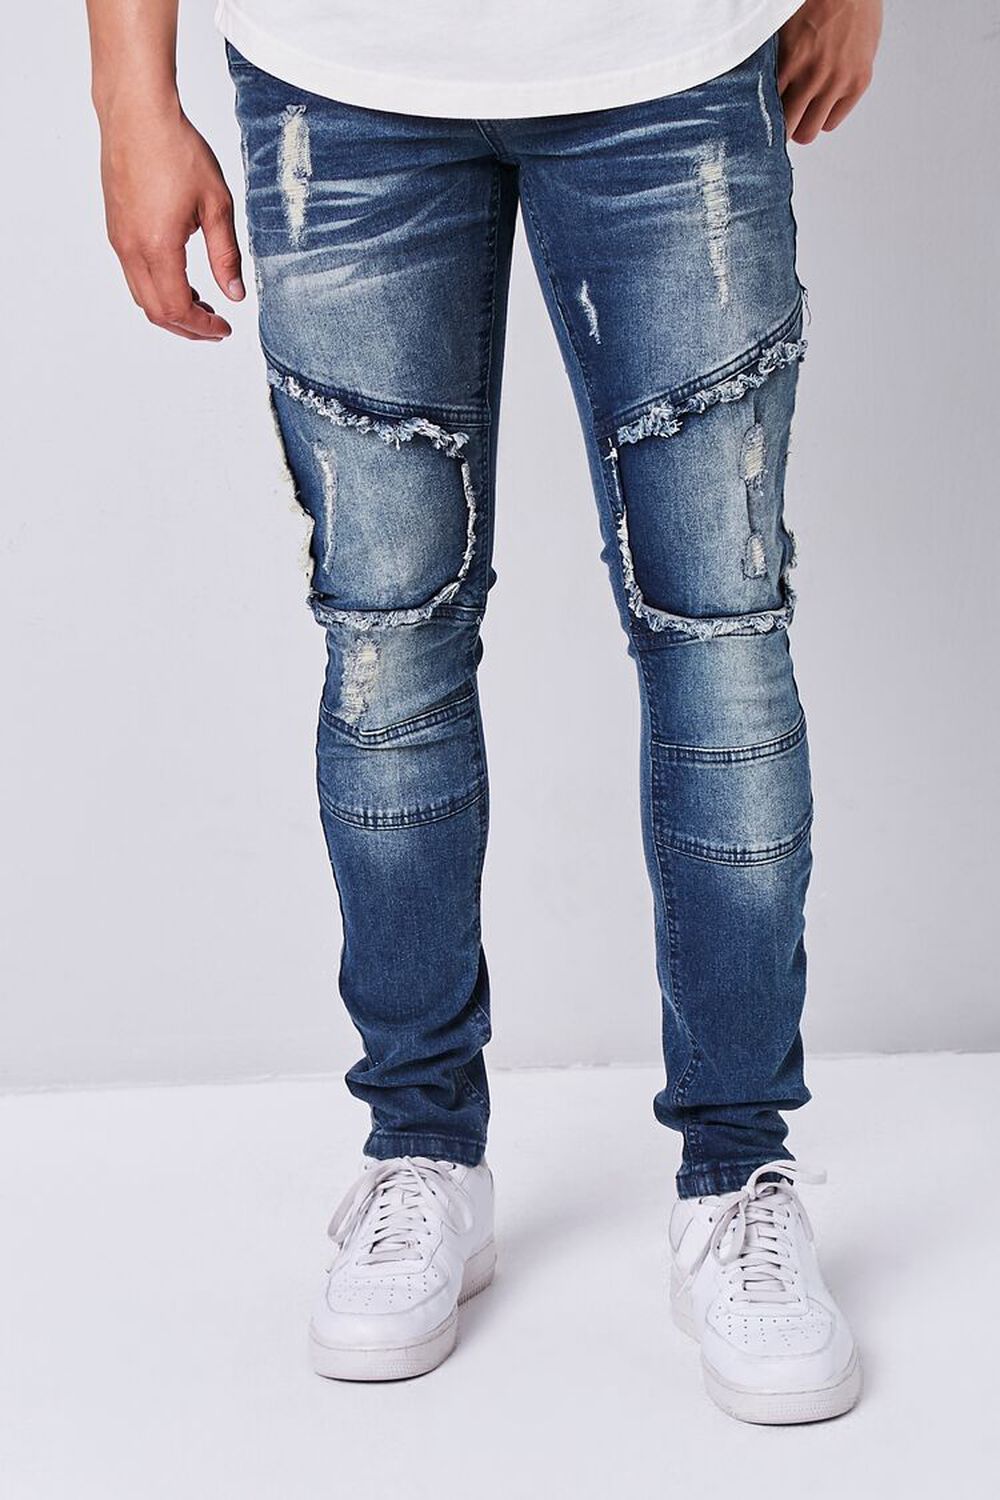 LIGHT DENIM Frayed Stonewash Slim-Fit Jeans, image 2